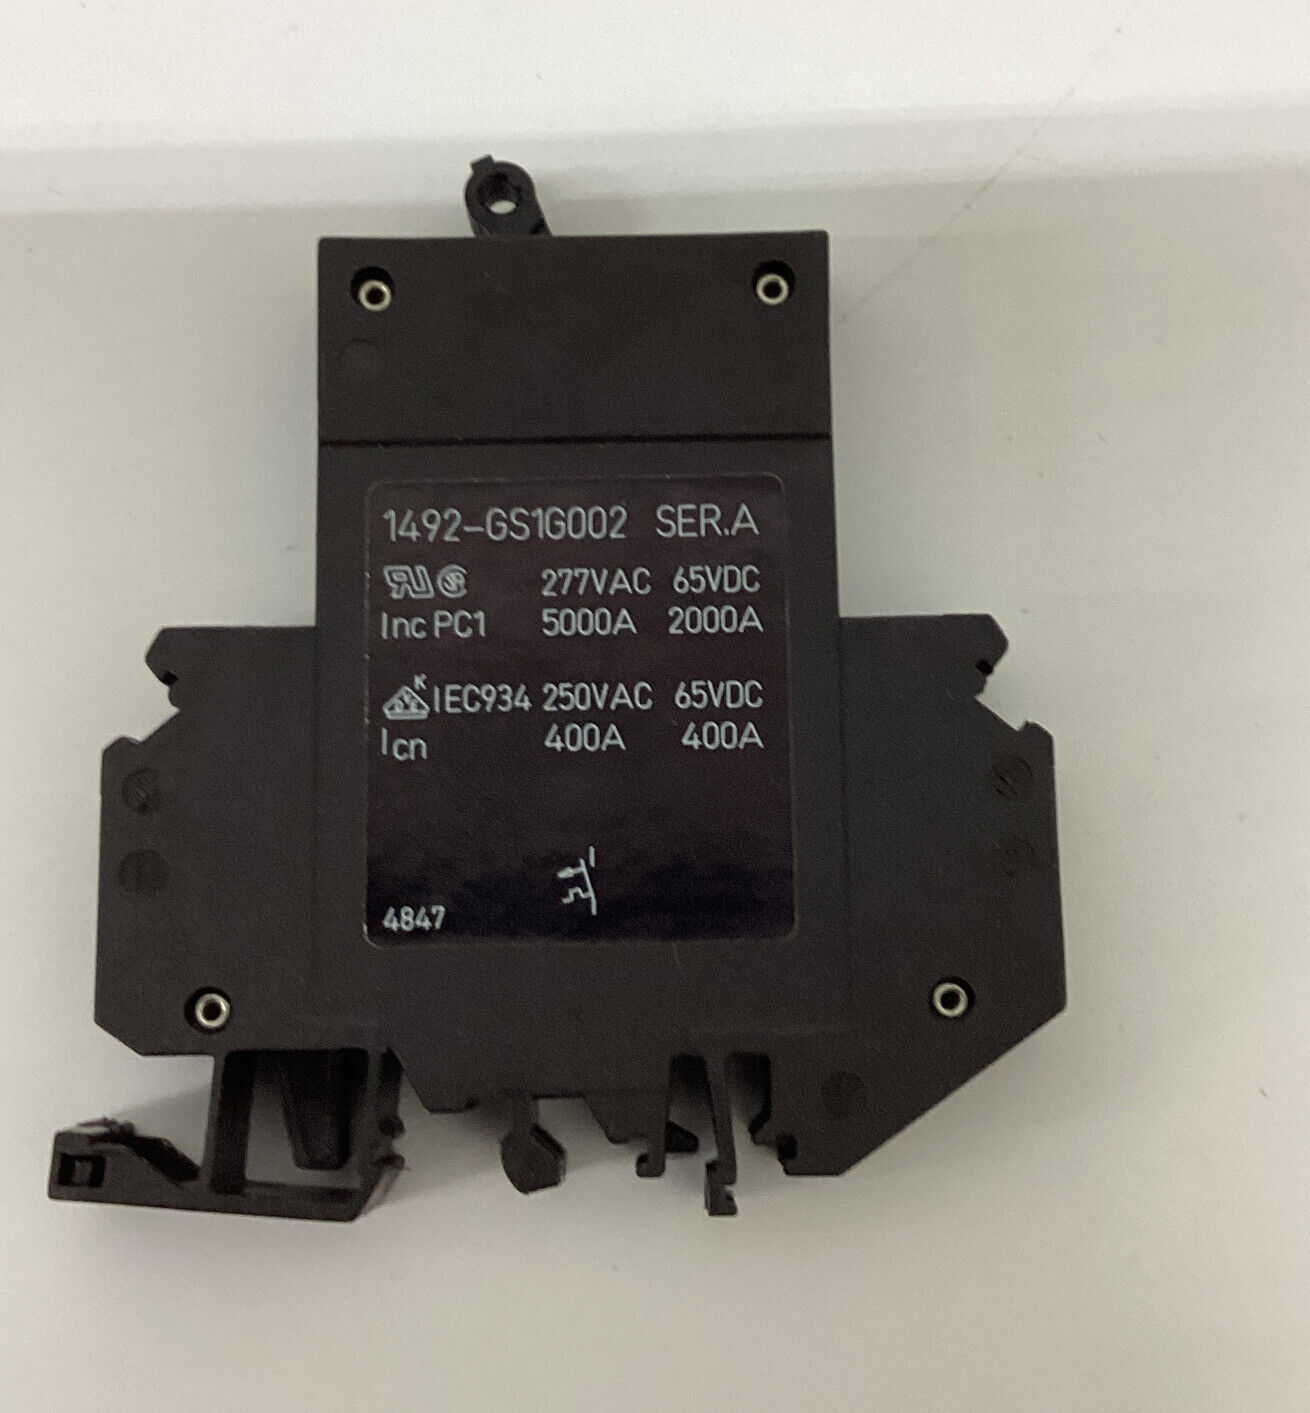 Allen Bradley  1492-GS1G010  Ser. A  1 Amp  Circuit Breaker  (CL249) - 0